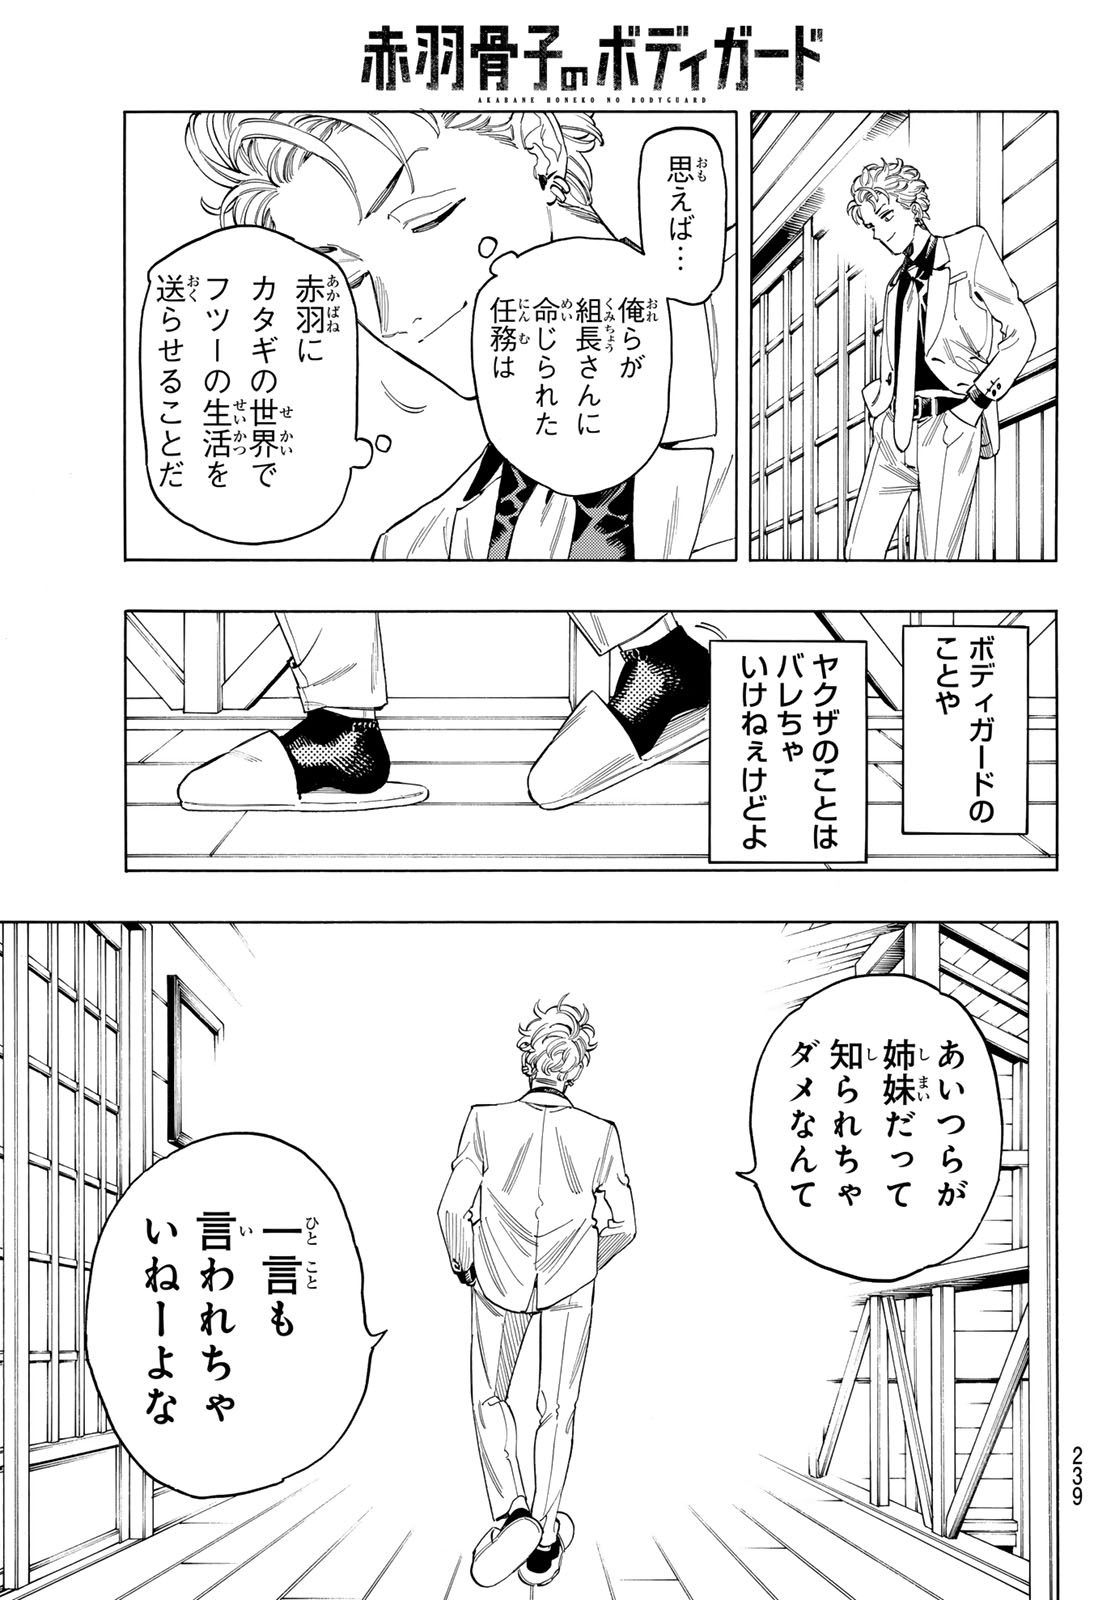 Akabane Honeko no Bodyguard - Chapter 88 - Page 15